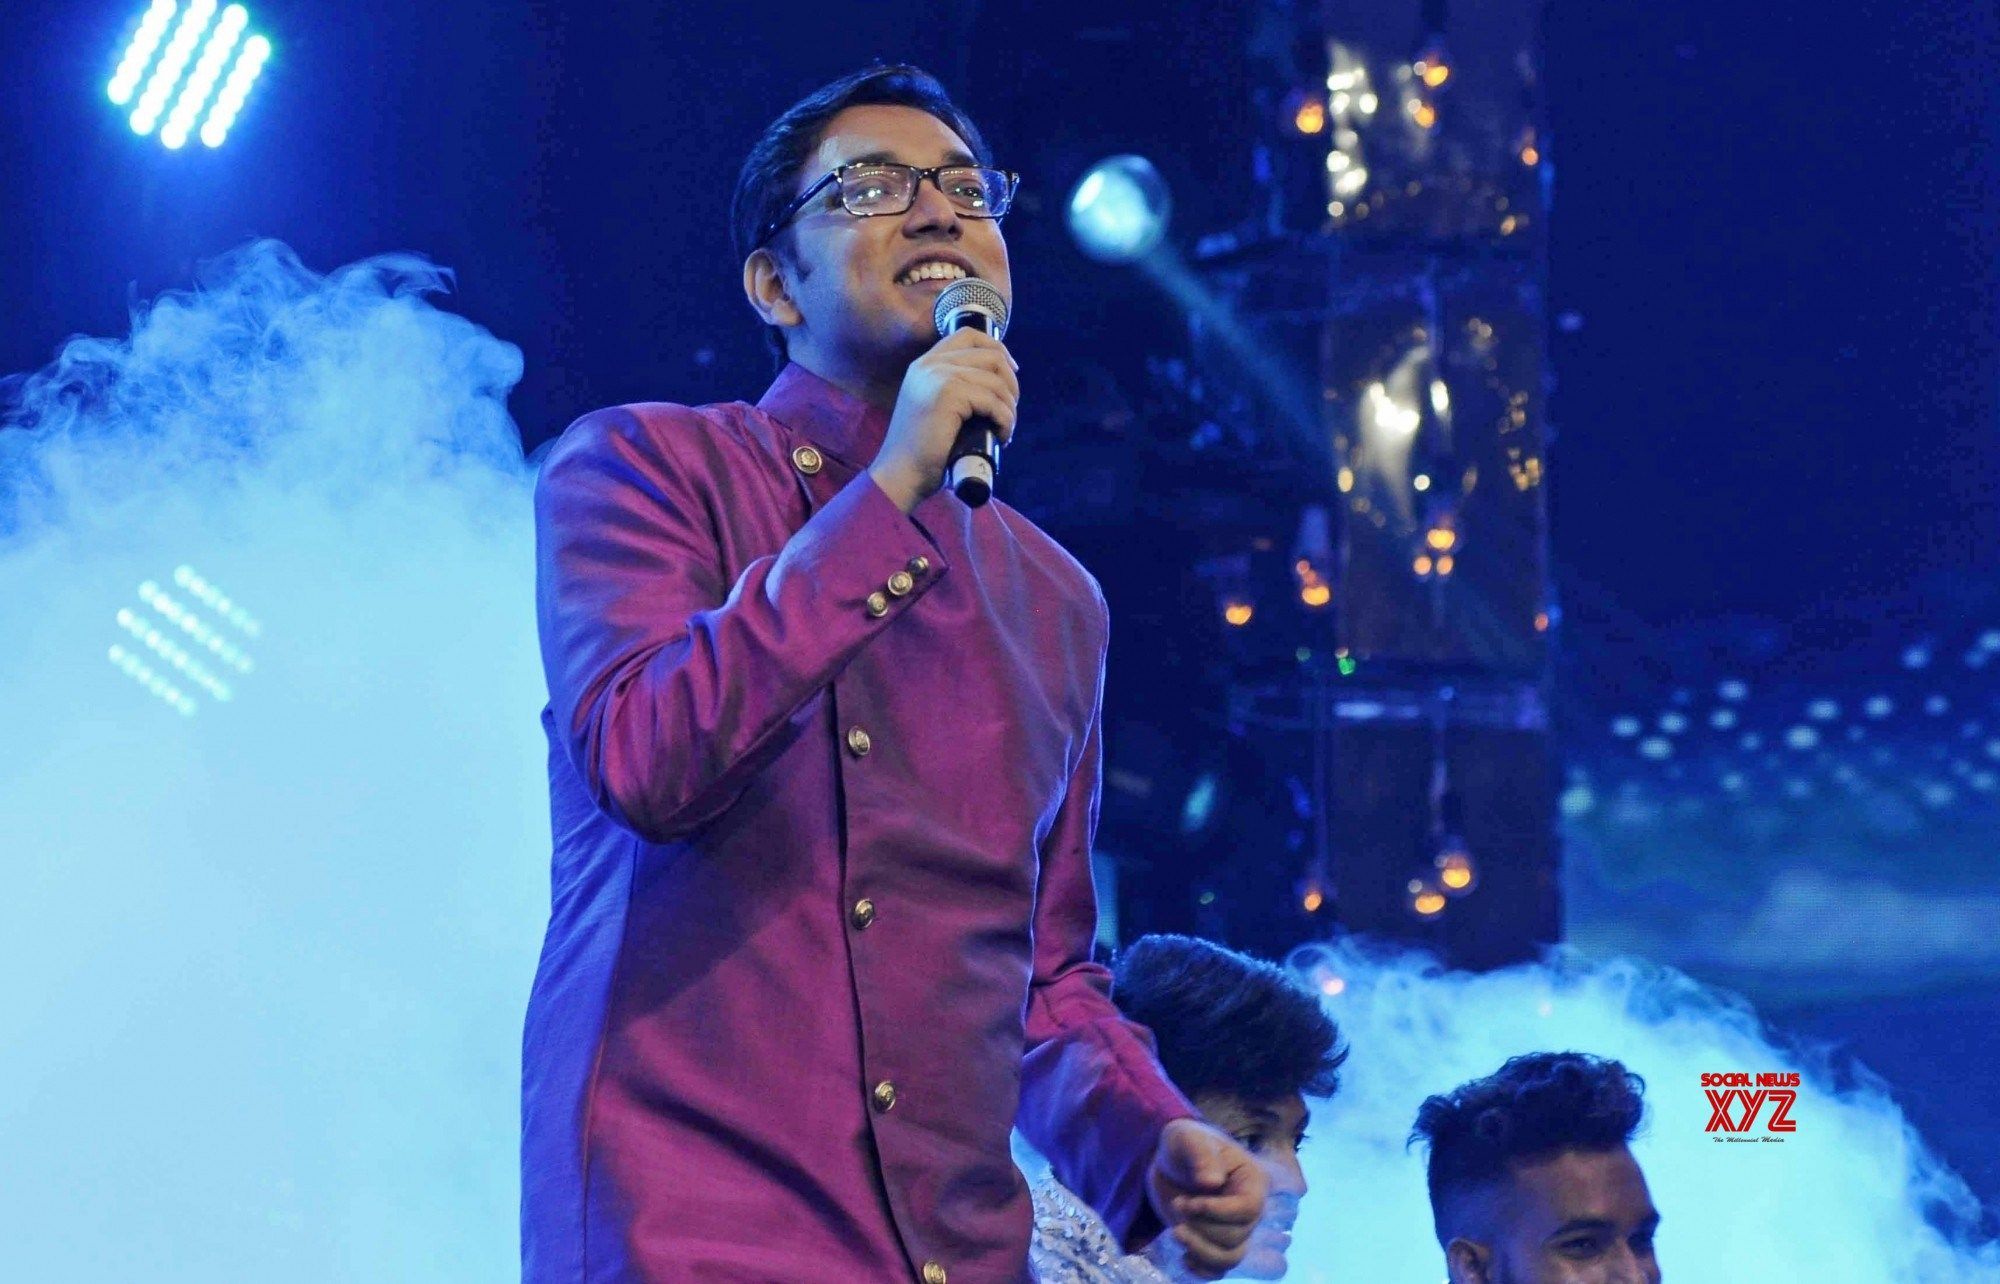 People misusing power will soon be under spotlight: Singer Anupam Roy on #MeToo. Singer, People, Social